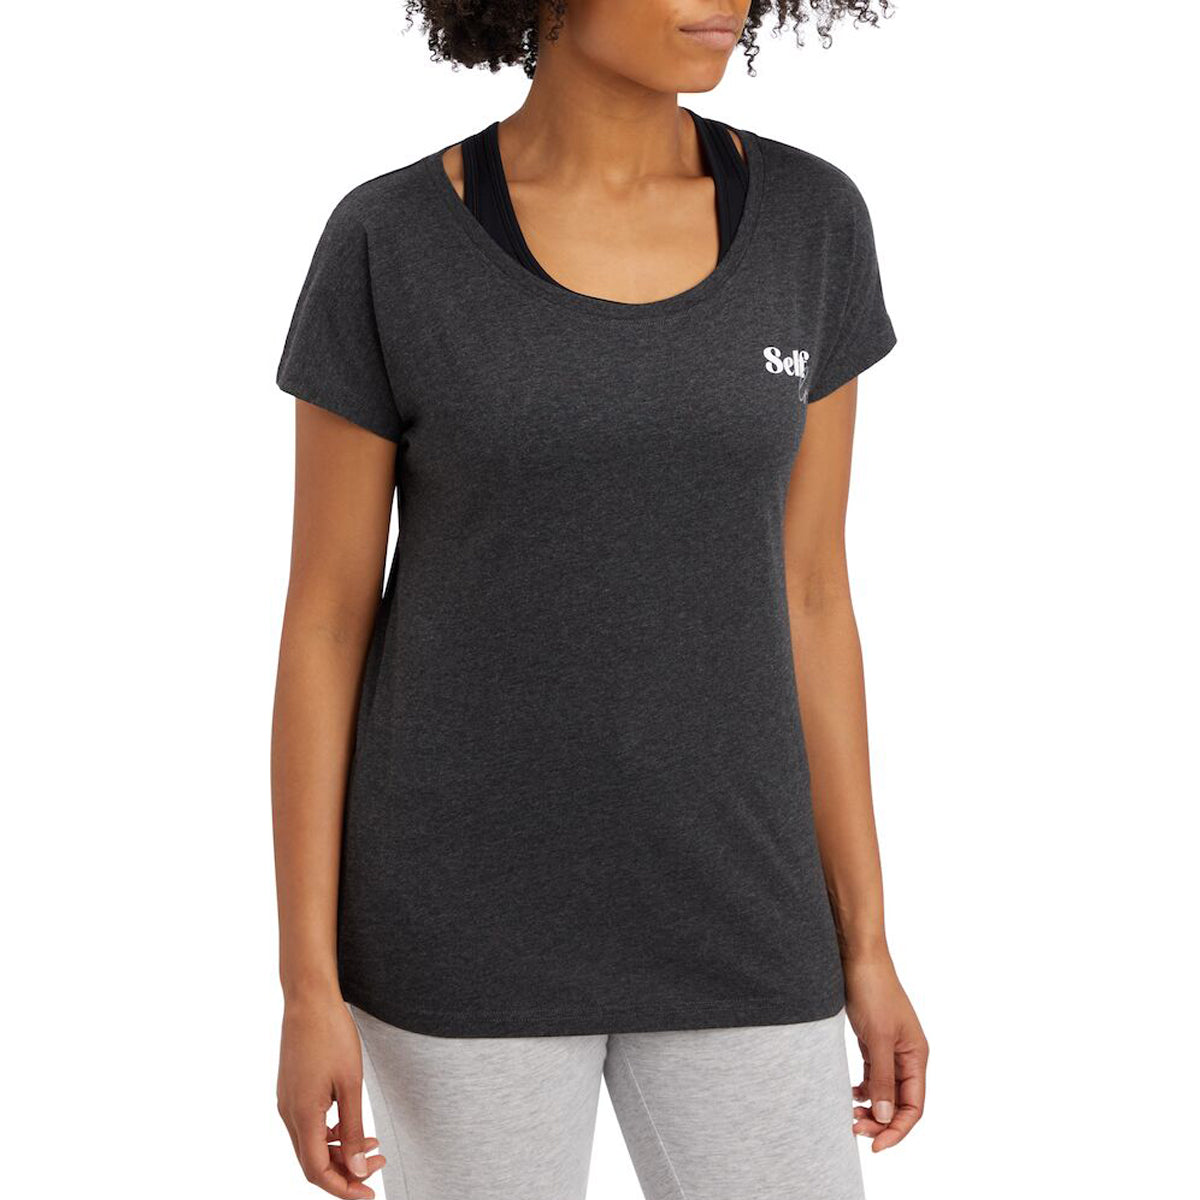 Energetics Cully Lifestyle T-Shirt For Women, Dark Grey